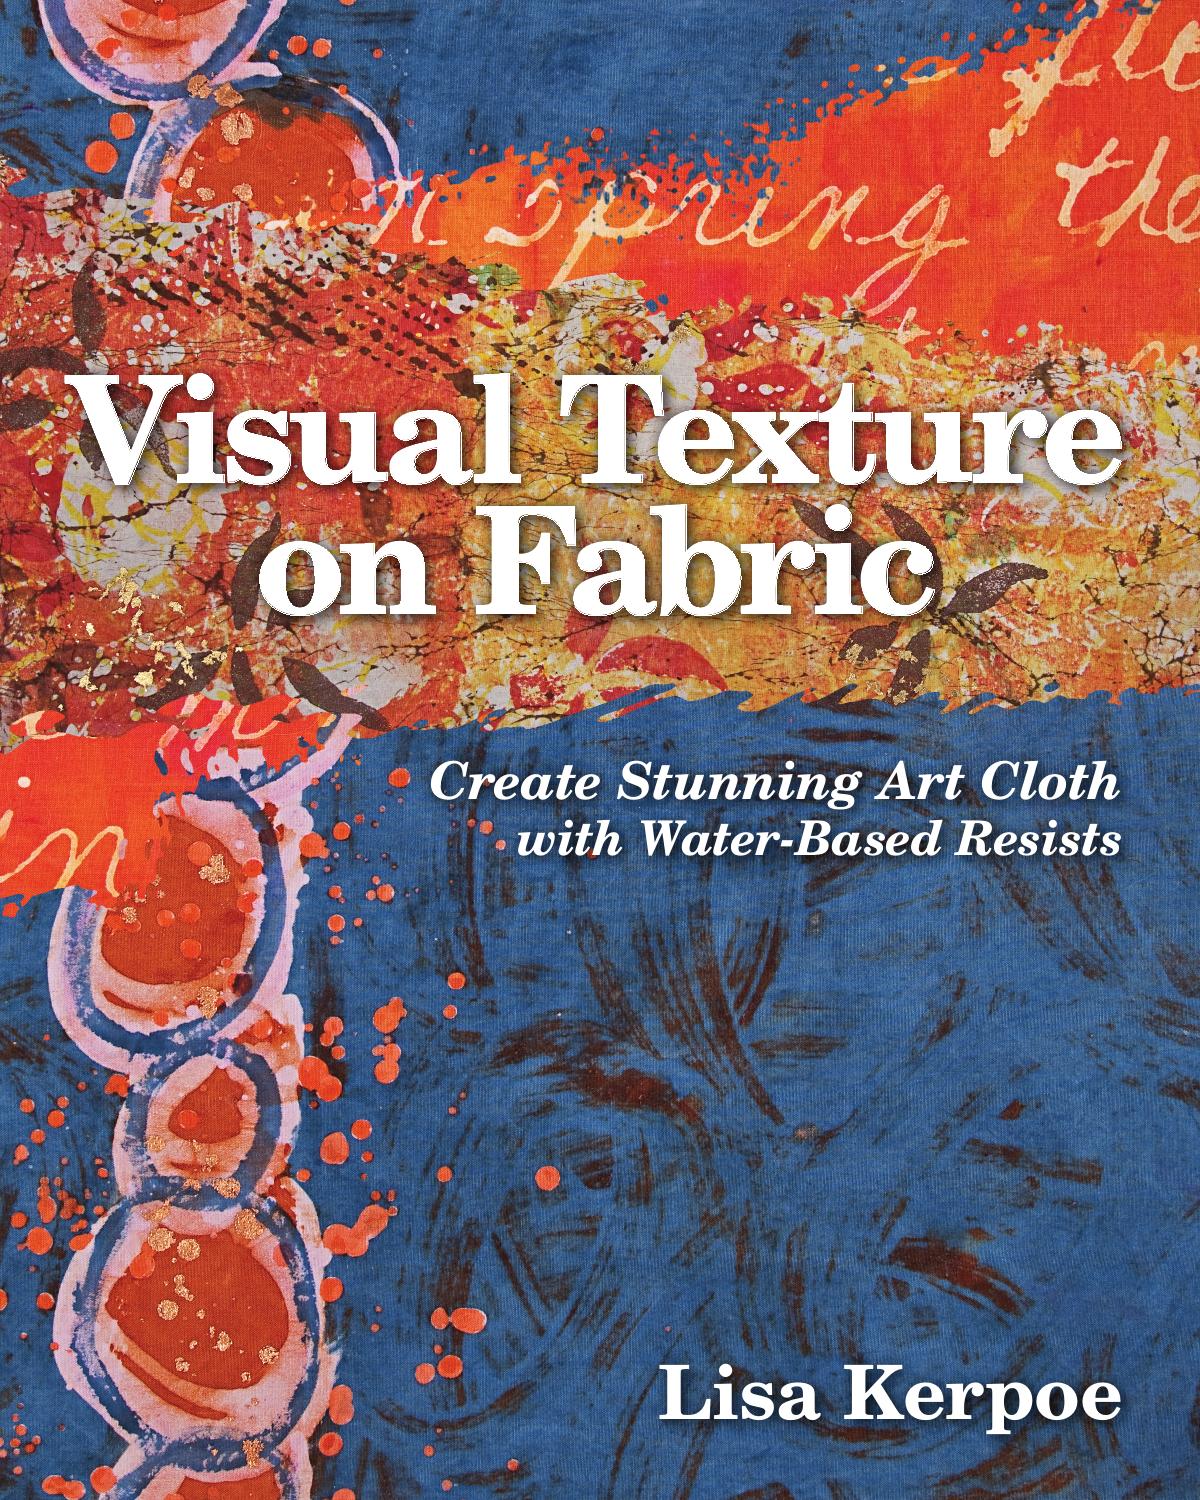 Visual Texture on Fabric by Lisa Kerpoe